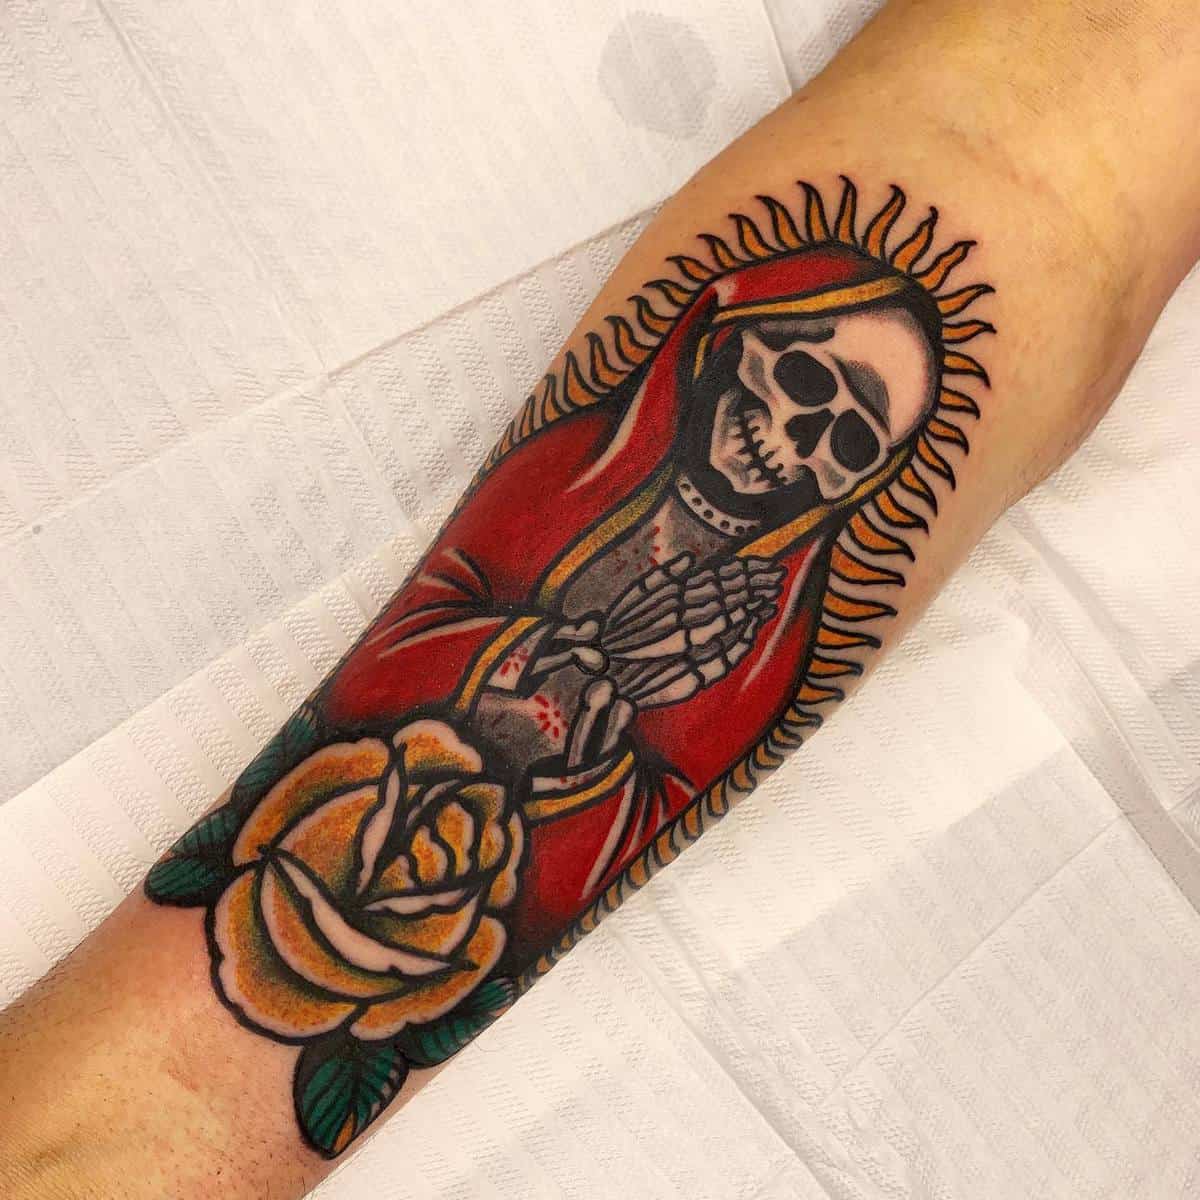 Tatouage traditionnel de Santa Muerte -deadlife.tattoo